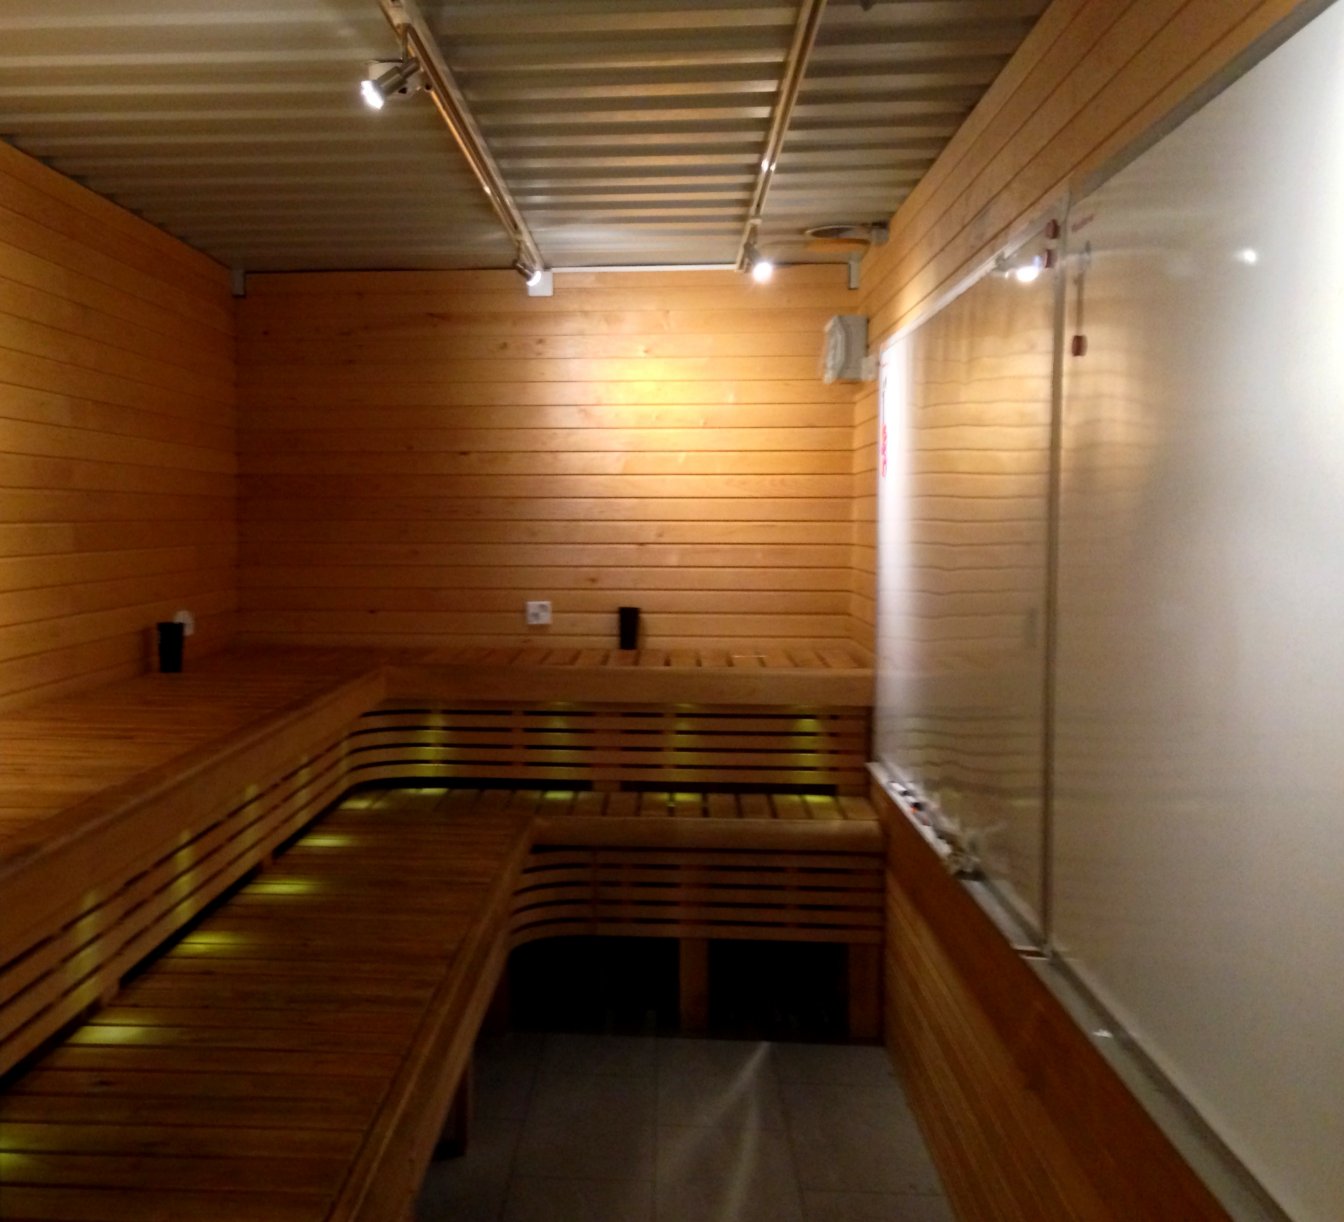 Finstoniburg: Startup Sauna | Benton Scholars News